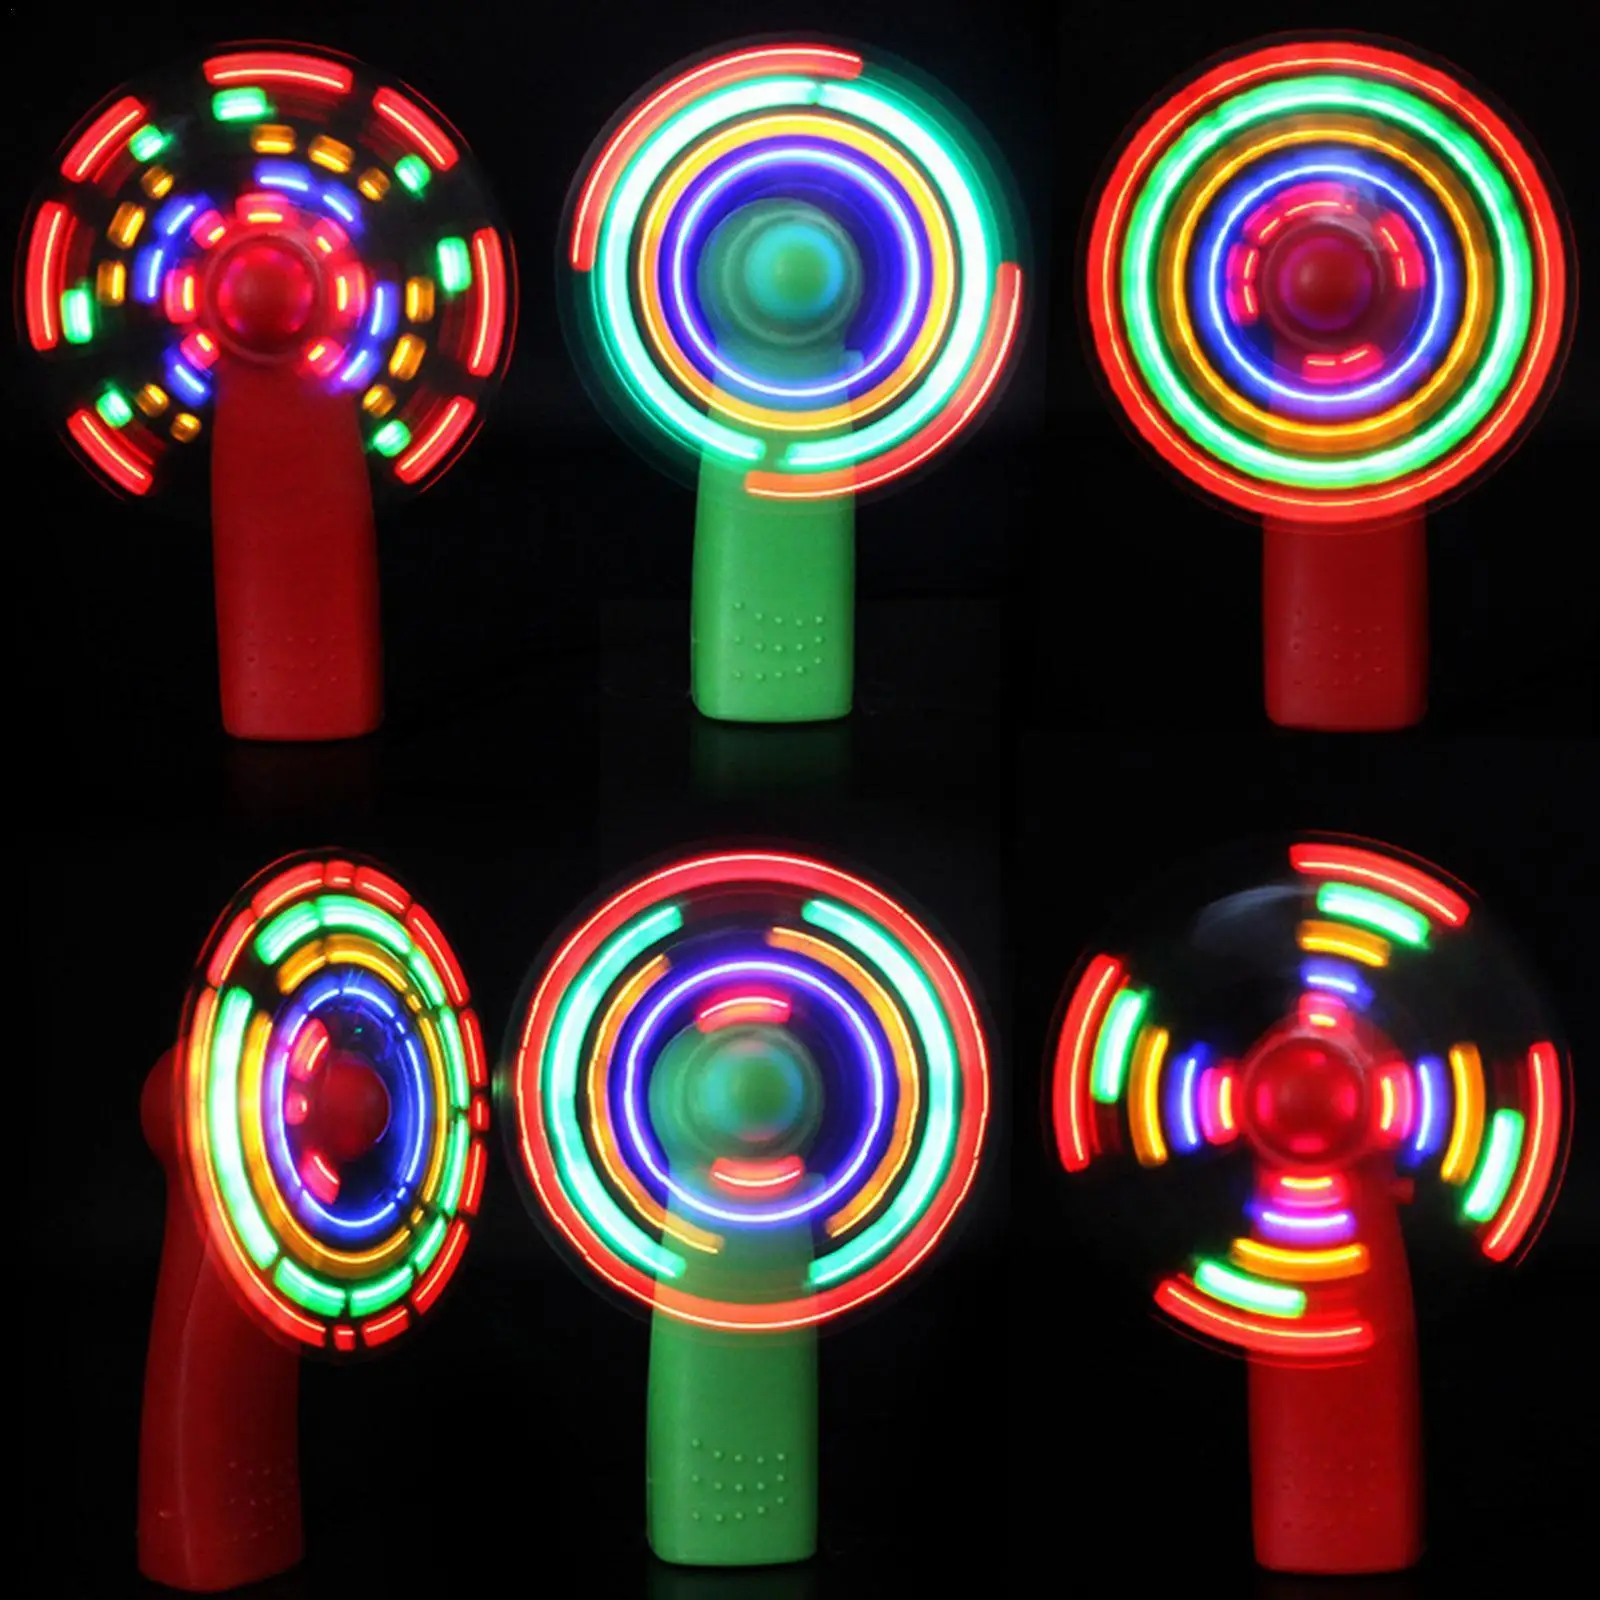 

Mini Led Led Glowing Fan Battery Operated Handheld Flexible Kids Party Fan Light Toy Led Colorful Gift Decoration Light Fla U0g7